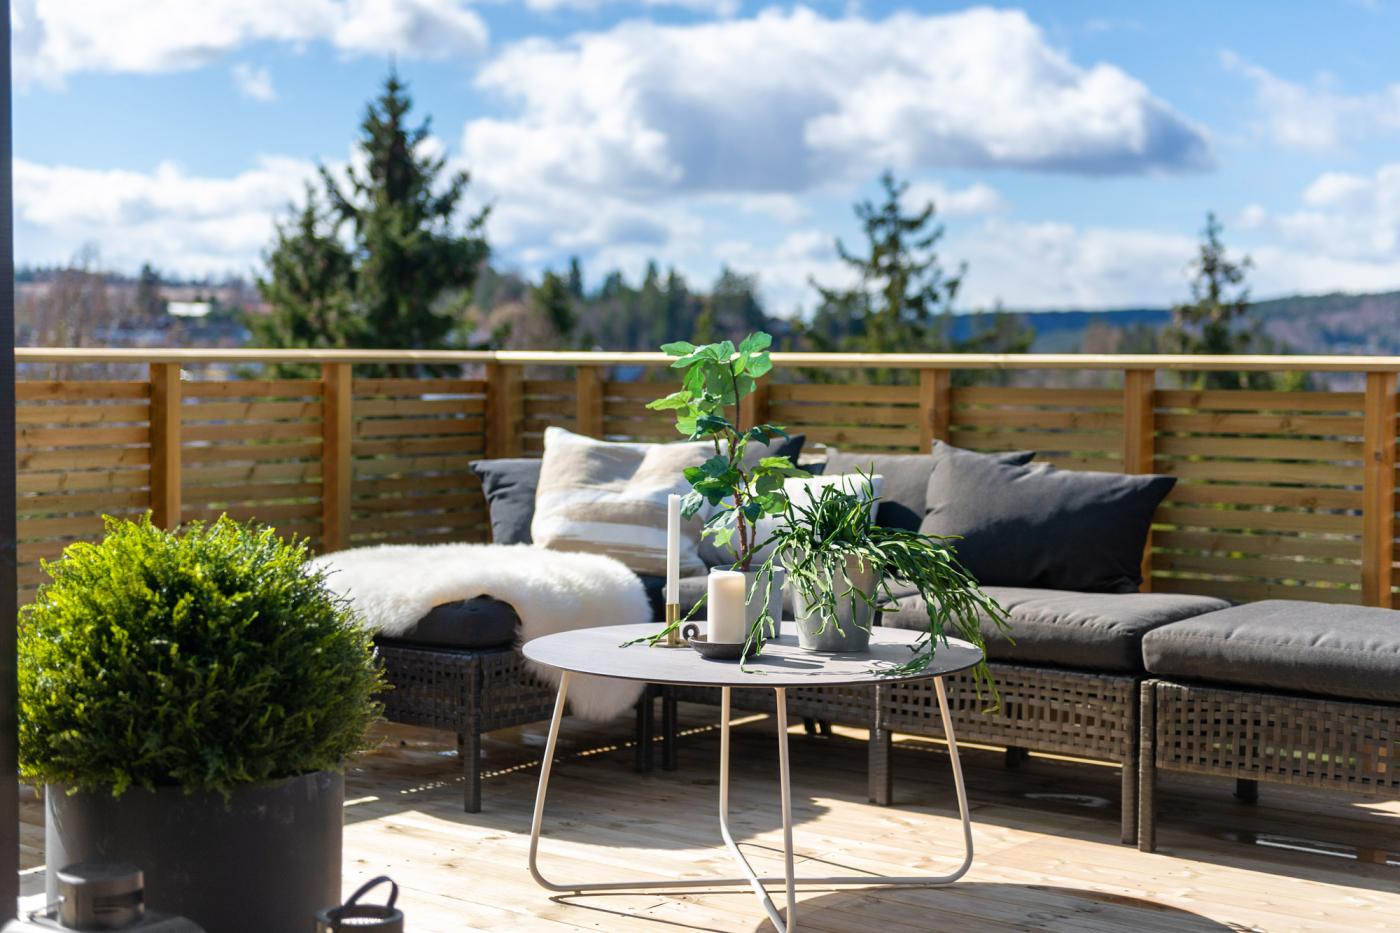 Terrasse med flotte planter og utemøbler